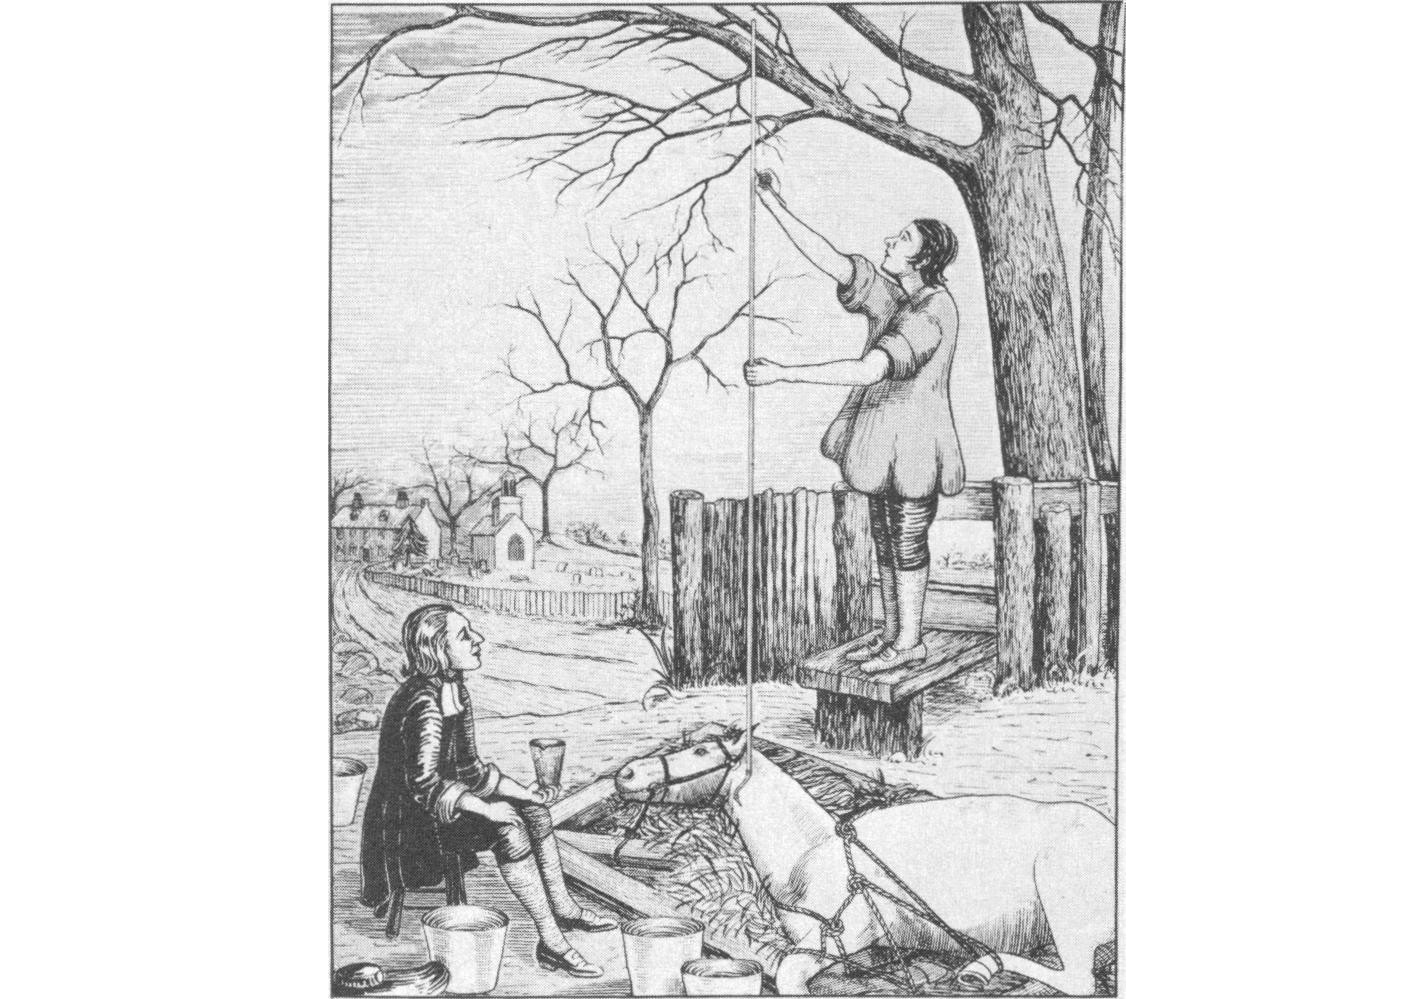 Rok 1733: Stephan Hales meria tlak v tepne ležiaceho koňa. (Kredit: HIT). https://myhitapp.com/blog/blood-pressure-history/